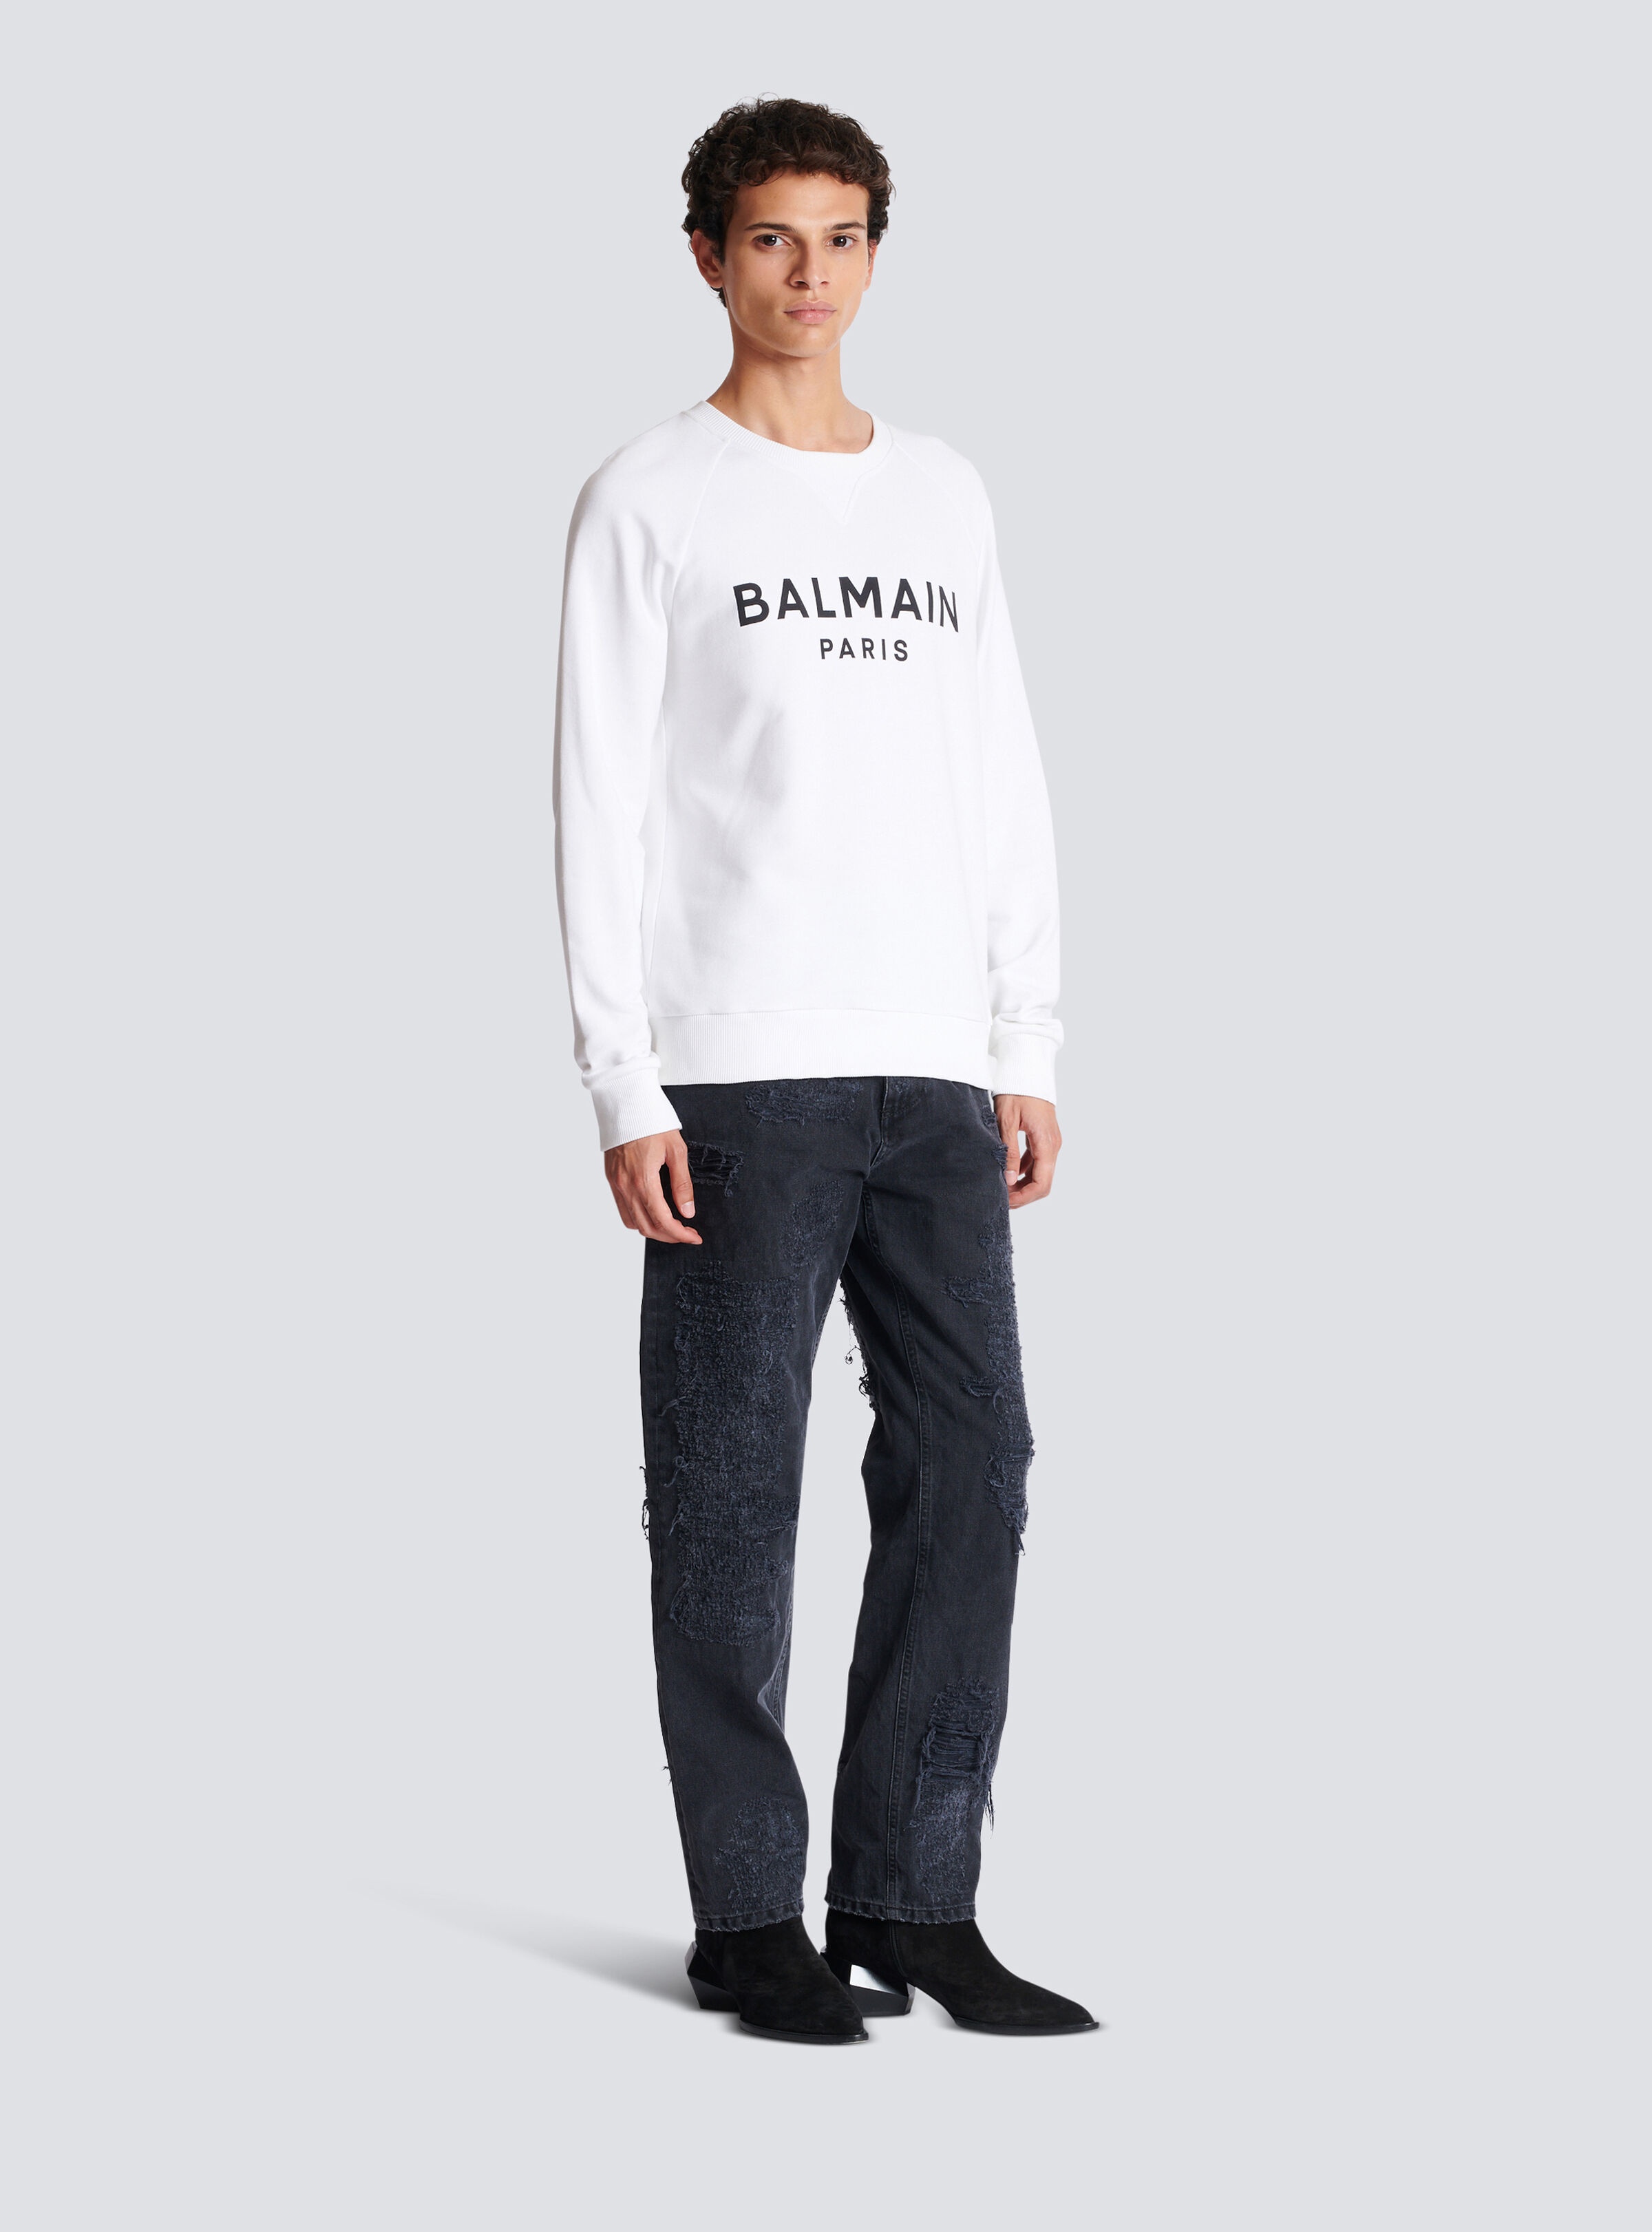 Balmain Paris sweatshirt - 3